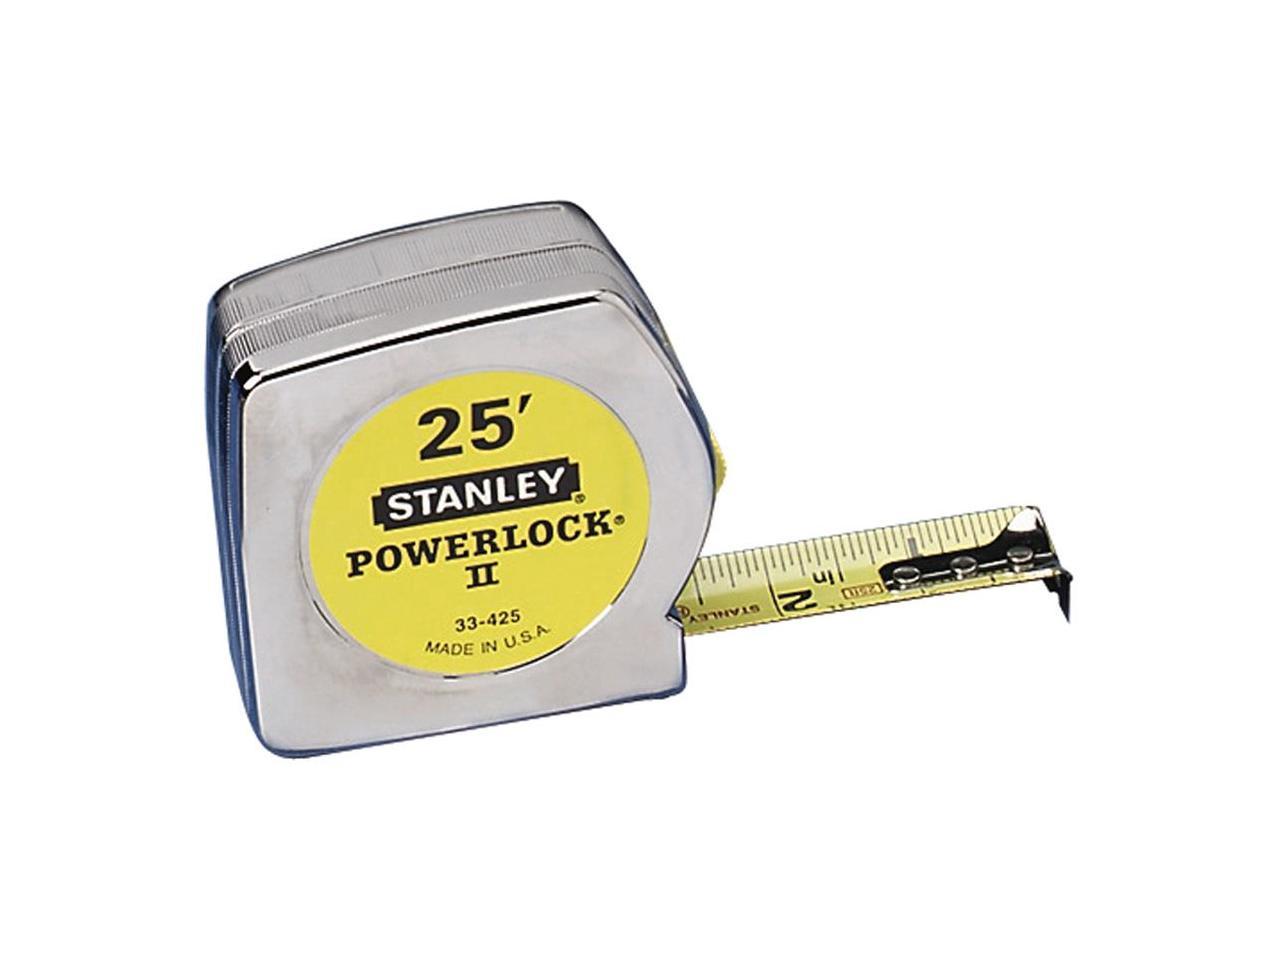 Stanley Hand Tools 33-425 1